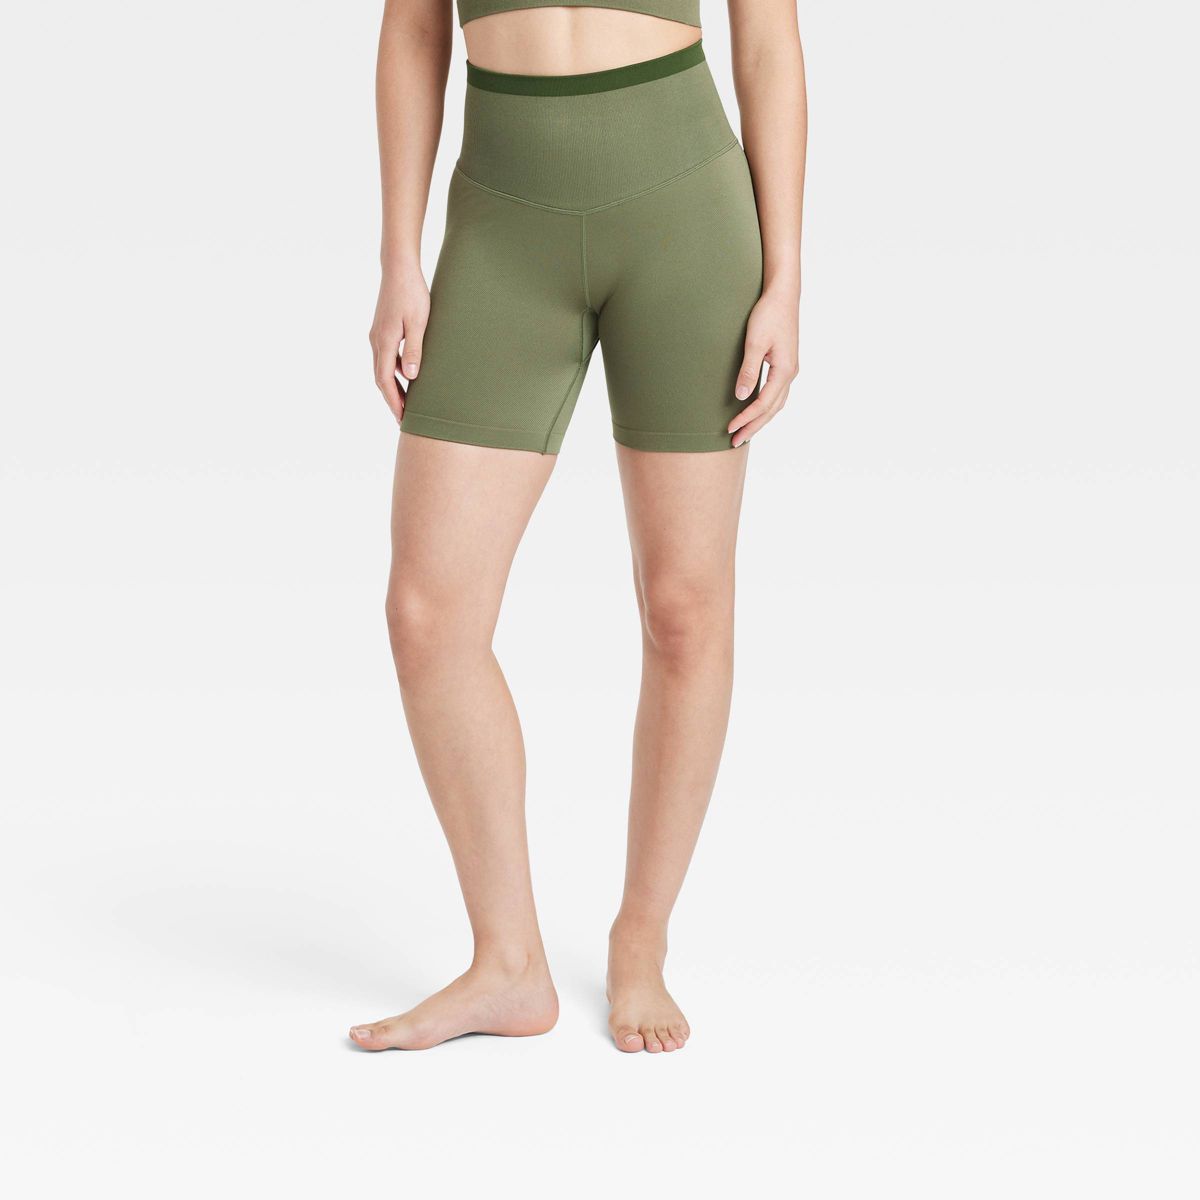 Women's Seamless High-Rise Bike Shorts 6" - JoyLab™ Olive Green L | Target